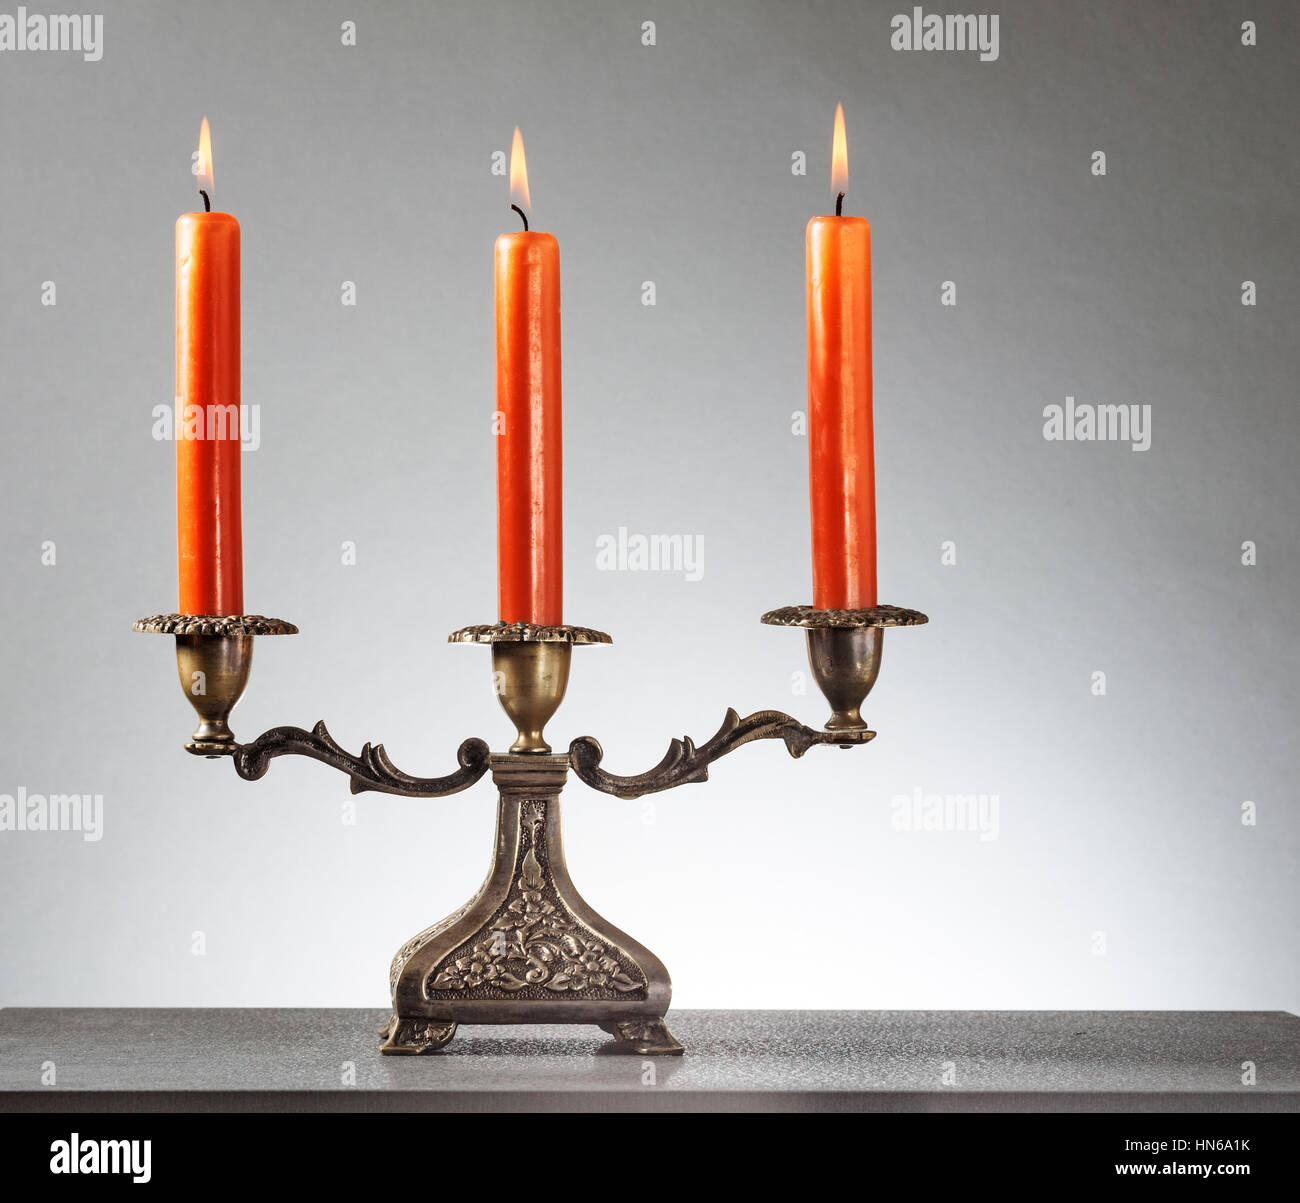 Antique bronze candlestick with three burning orange candles on gray background Stock Photo